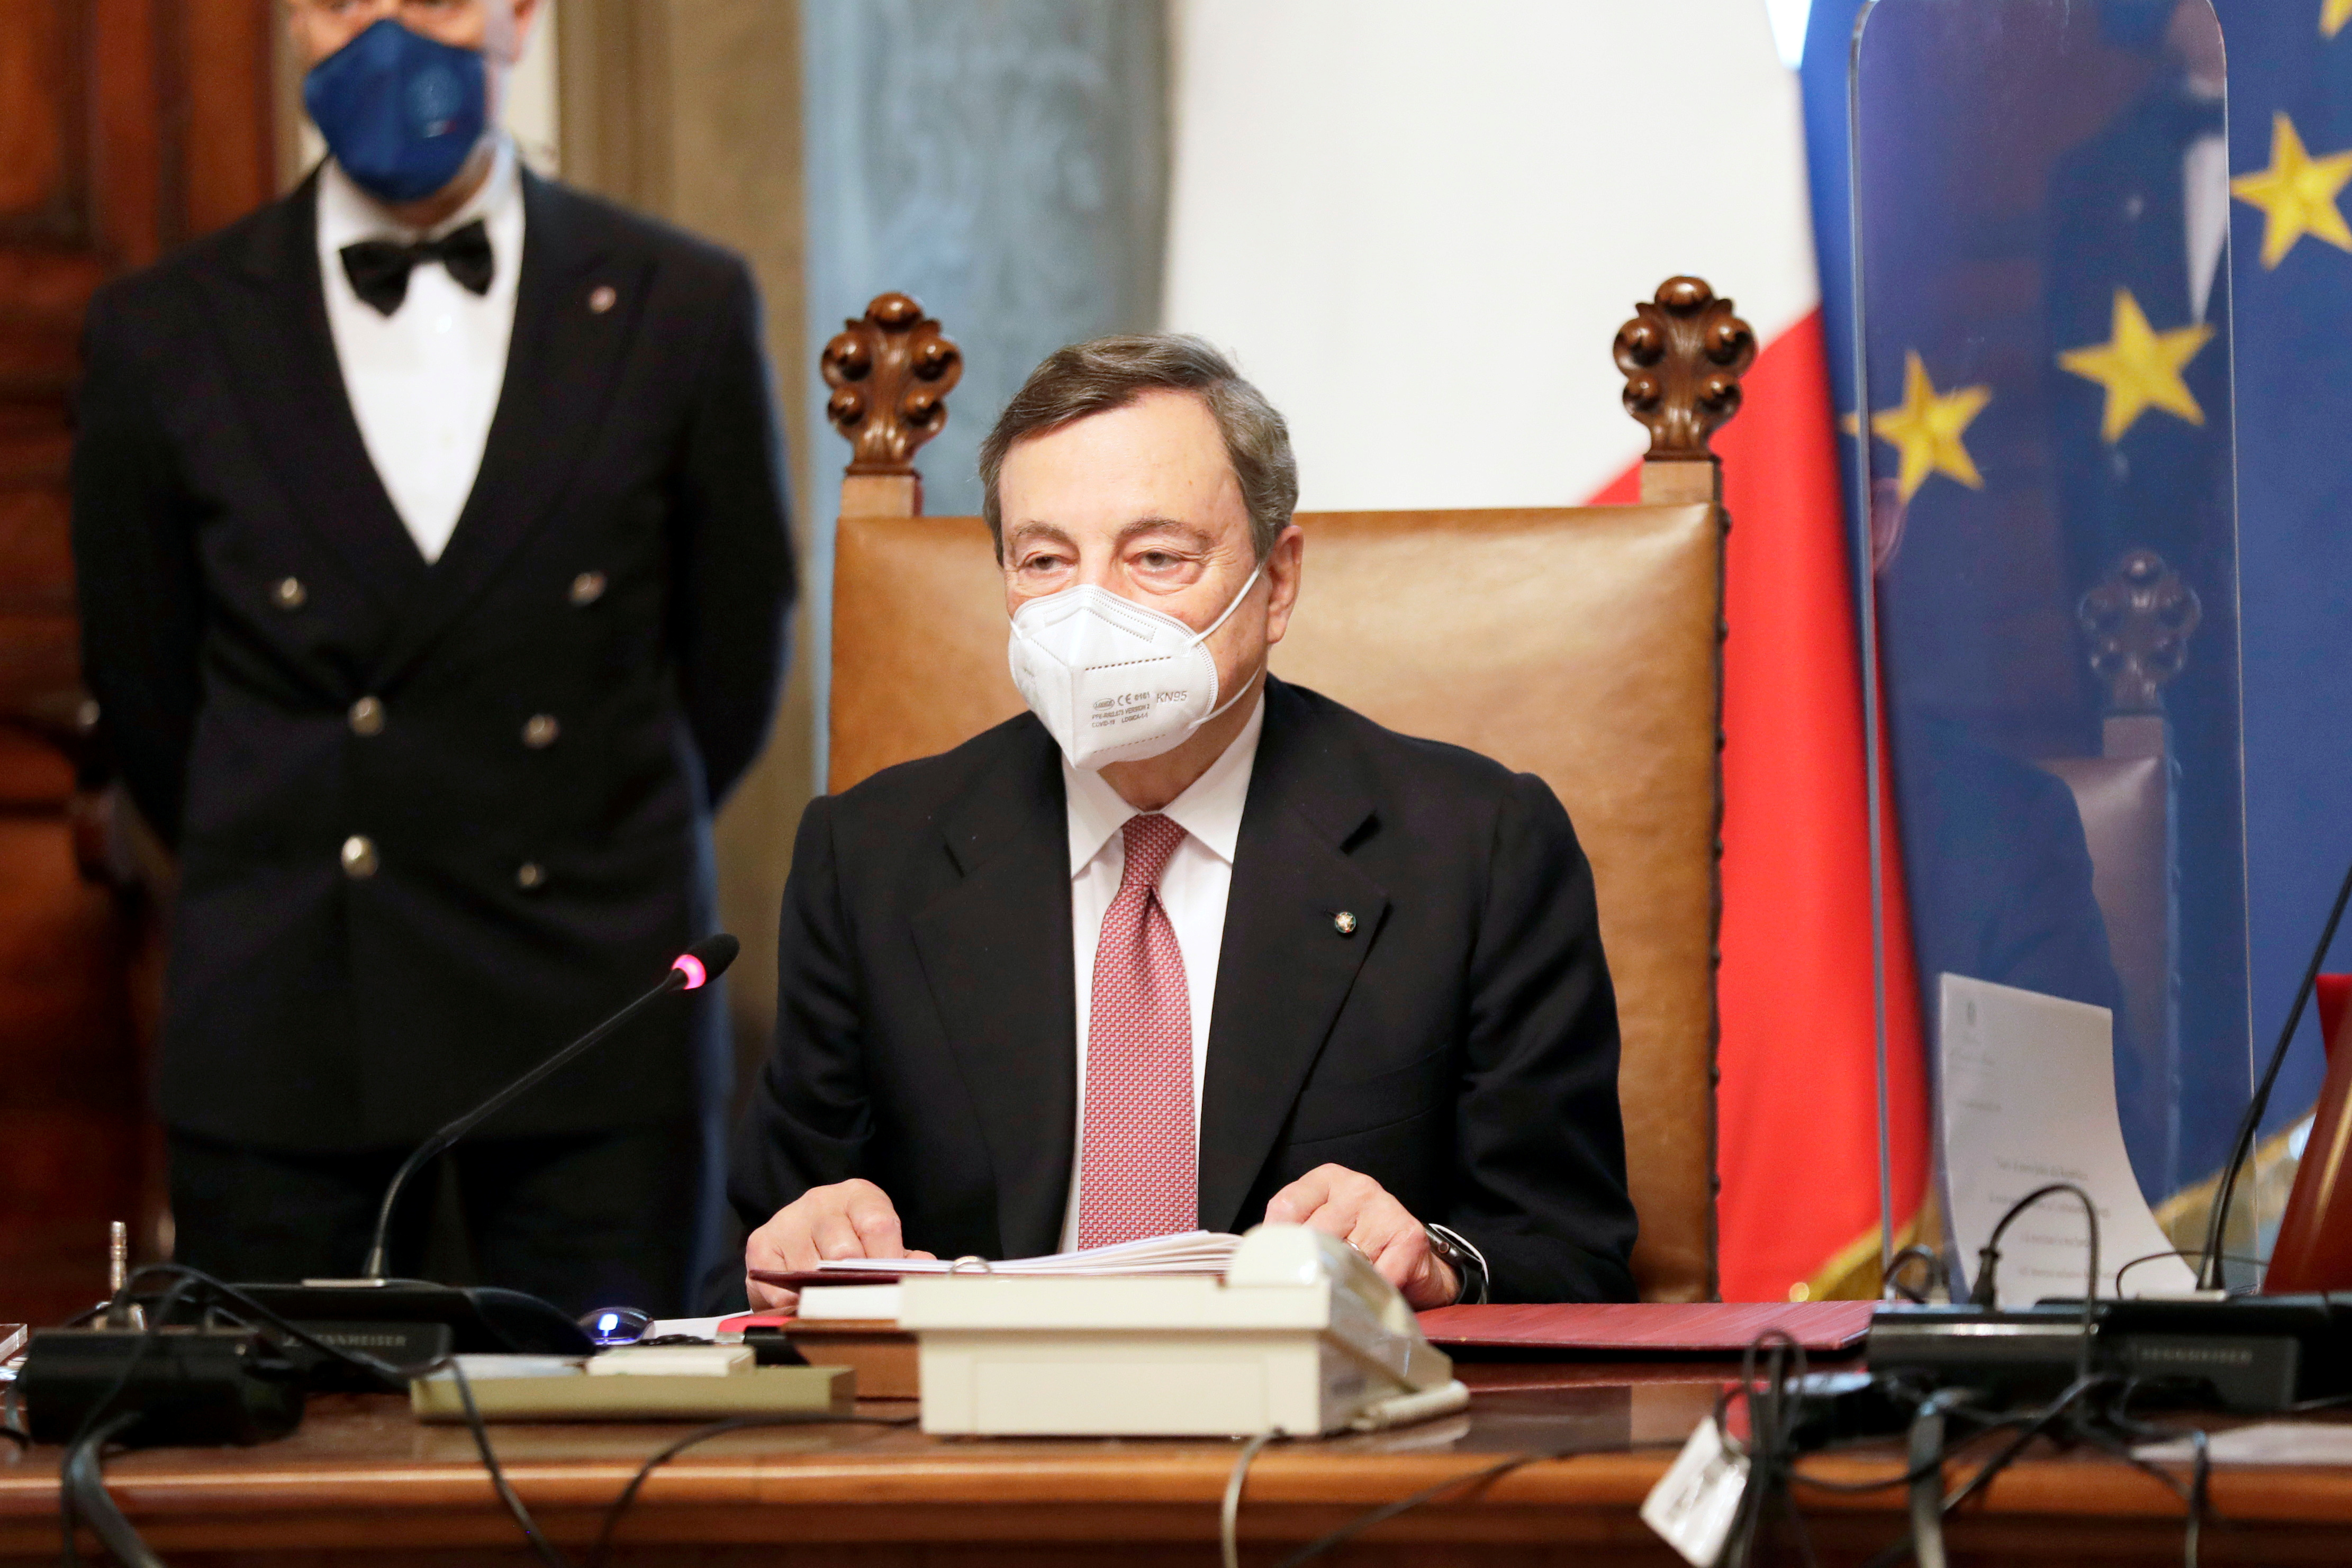 Prime Minister designate Draghi and his new government are sworn-in, in Rome